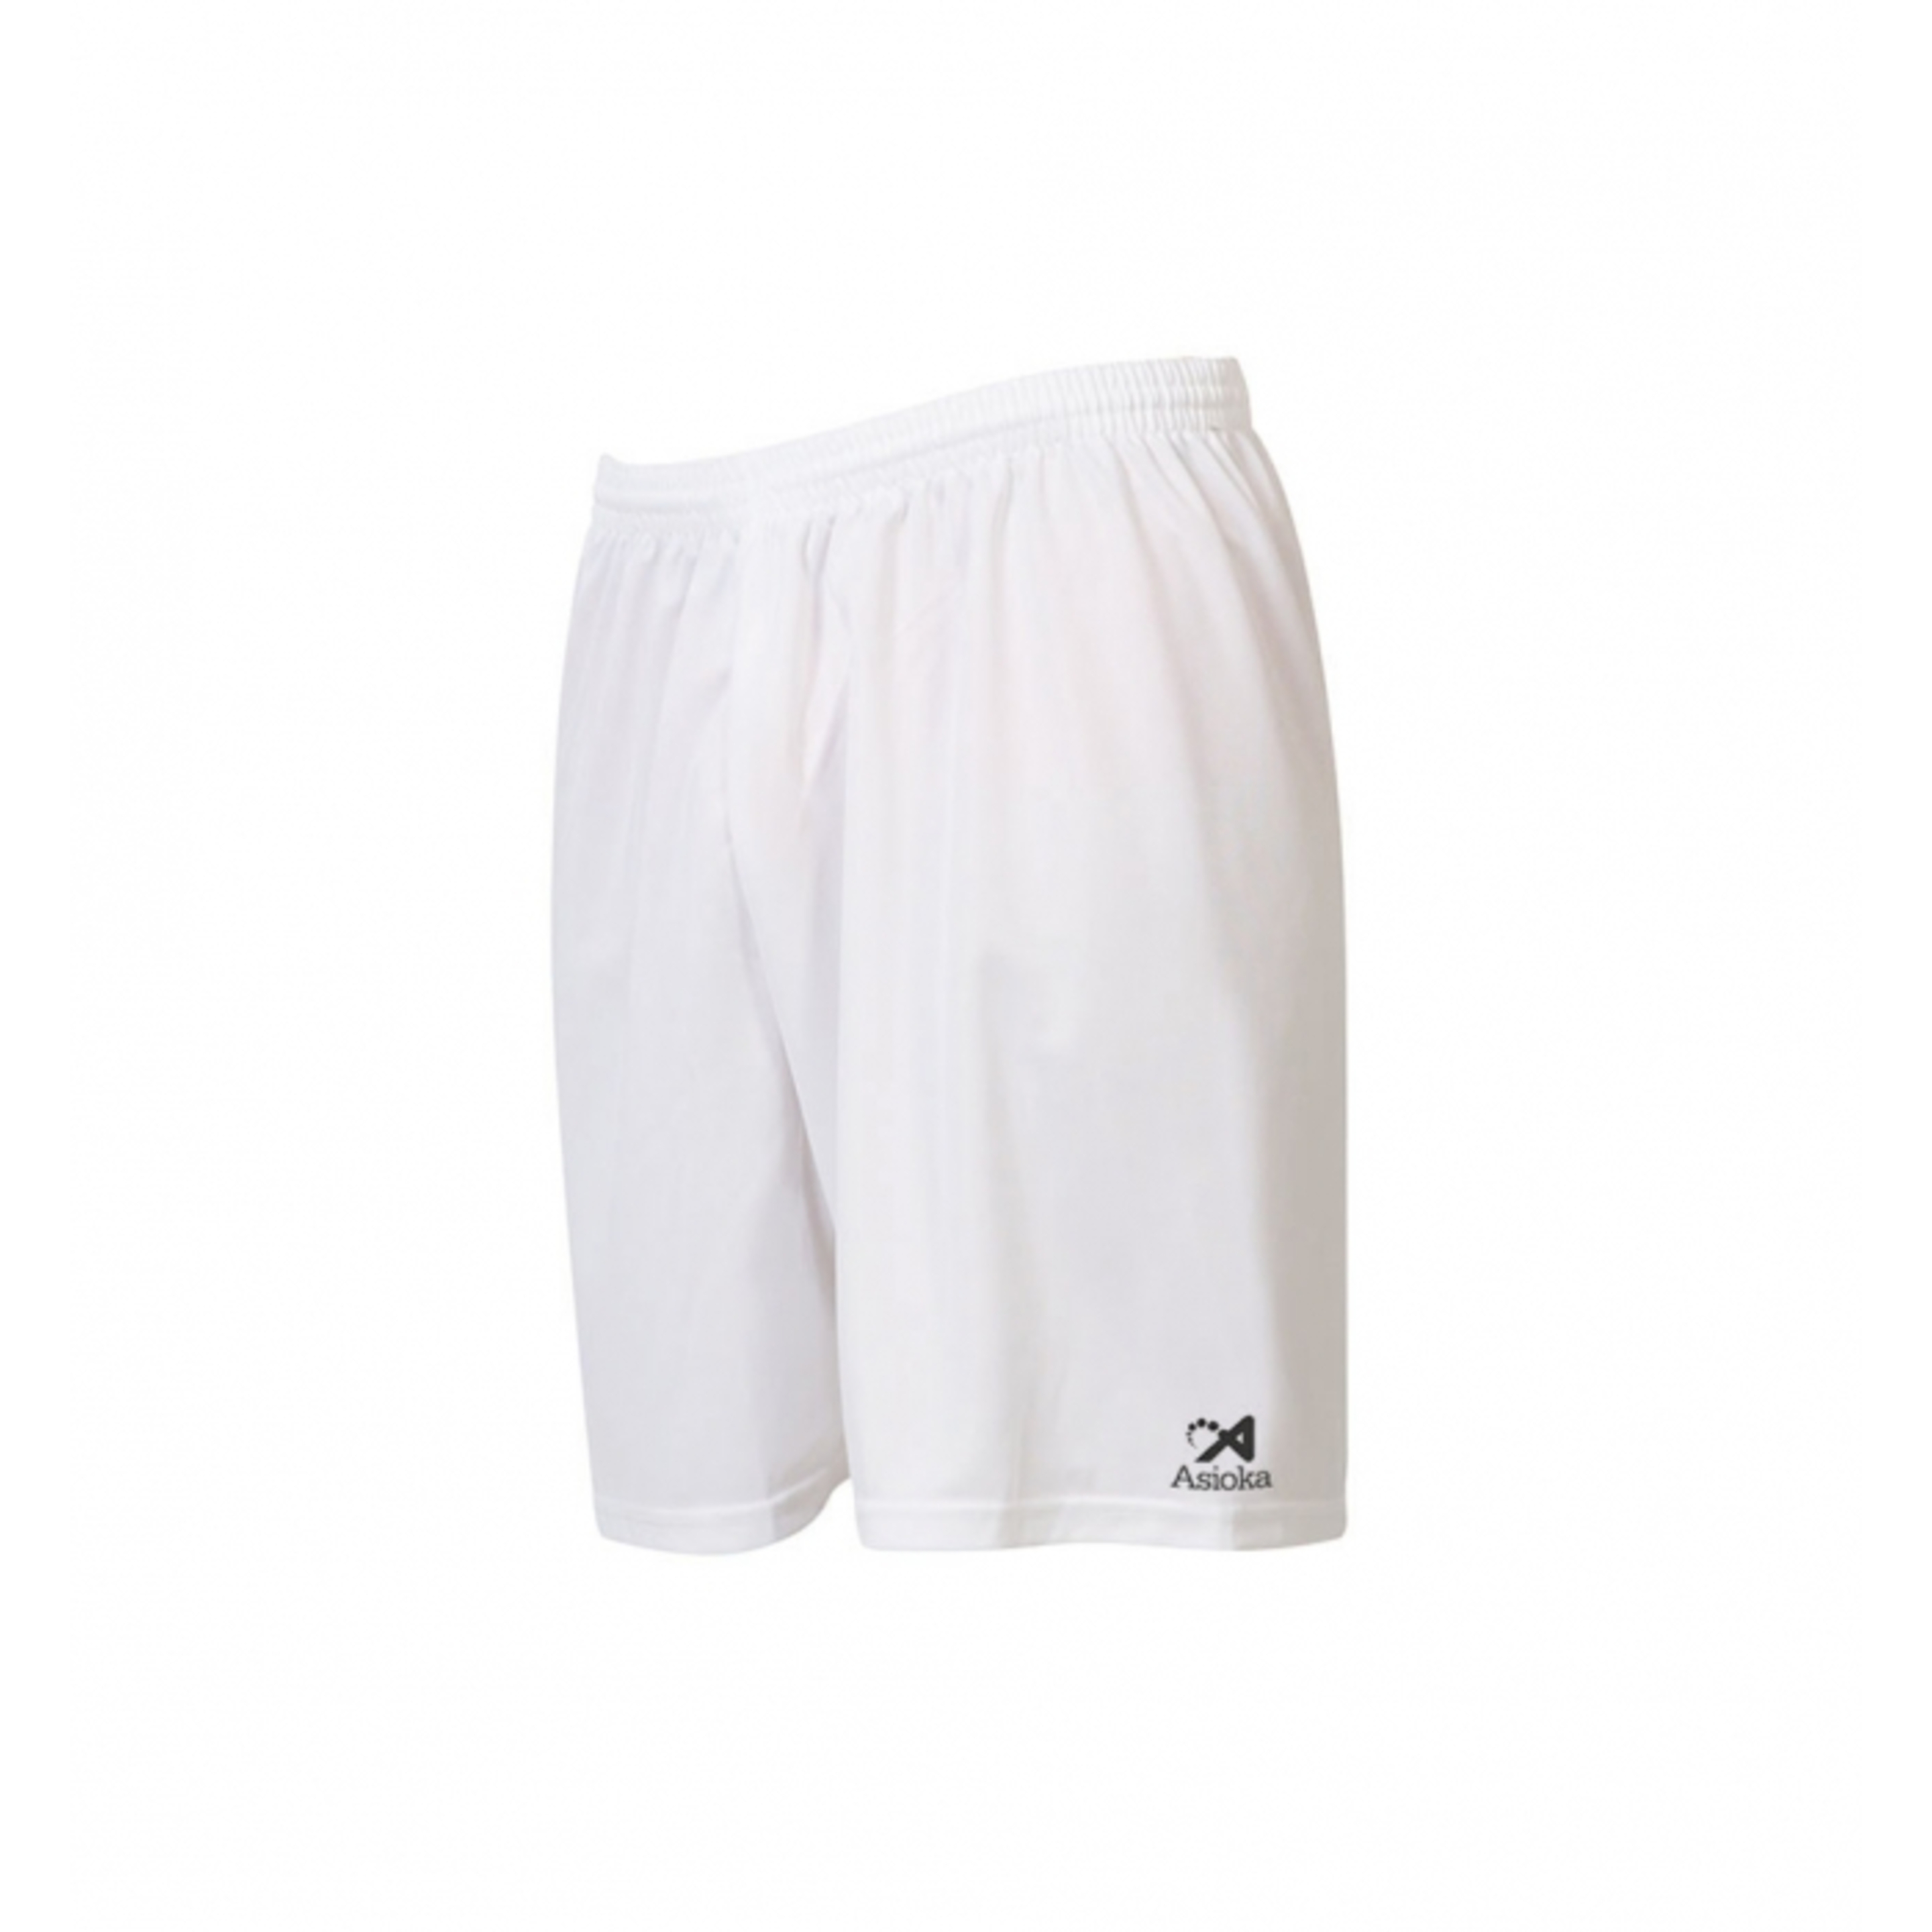 Pantalón Corto Asioka Premium - blanco - Futbol Unisex  MKP